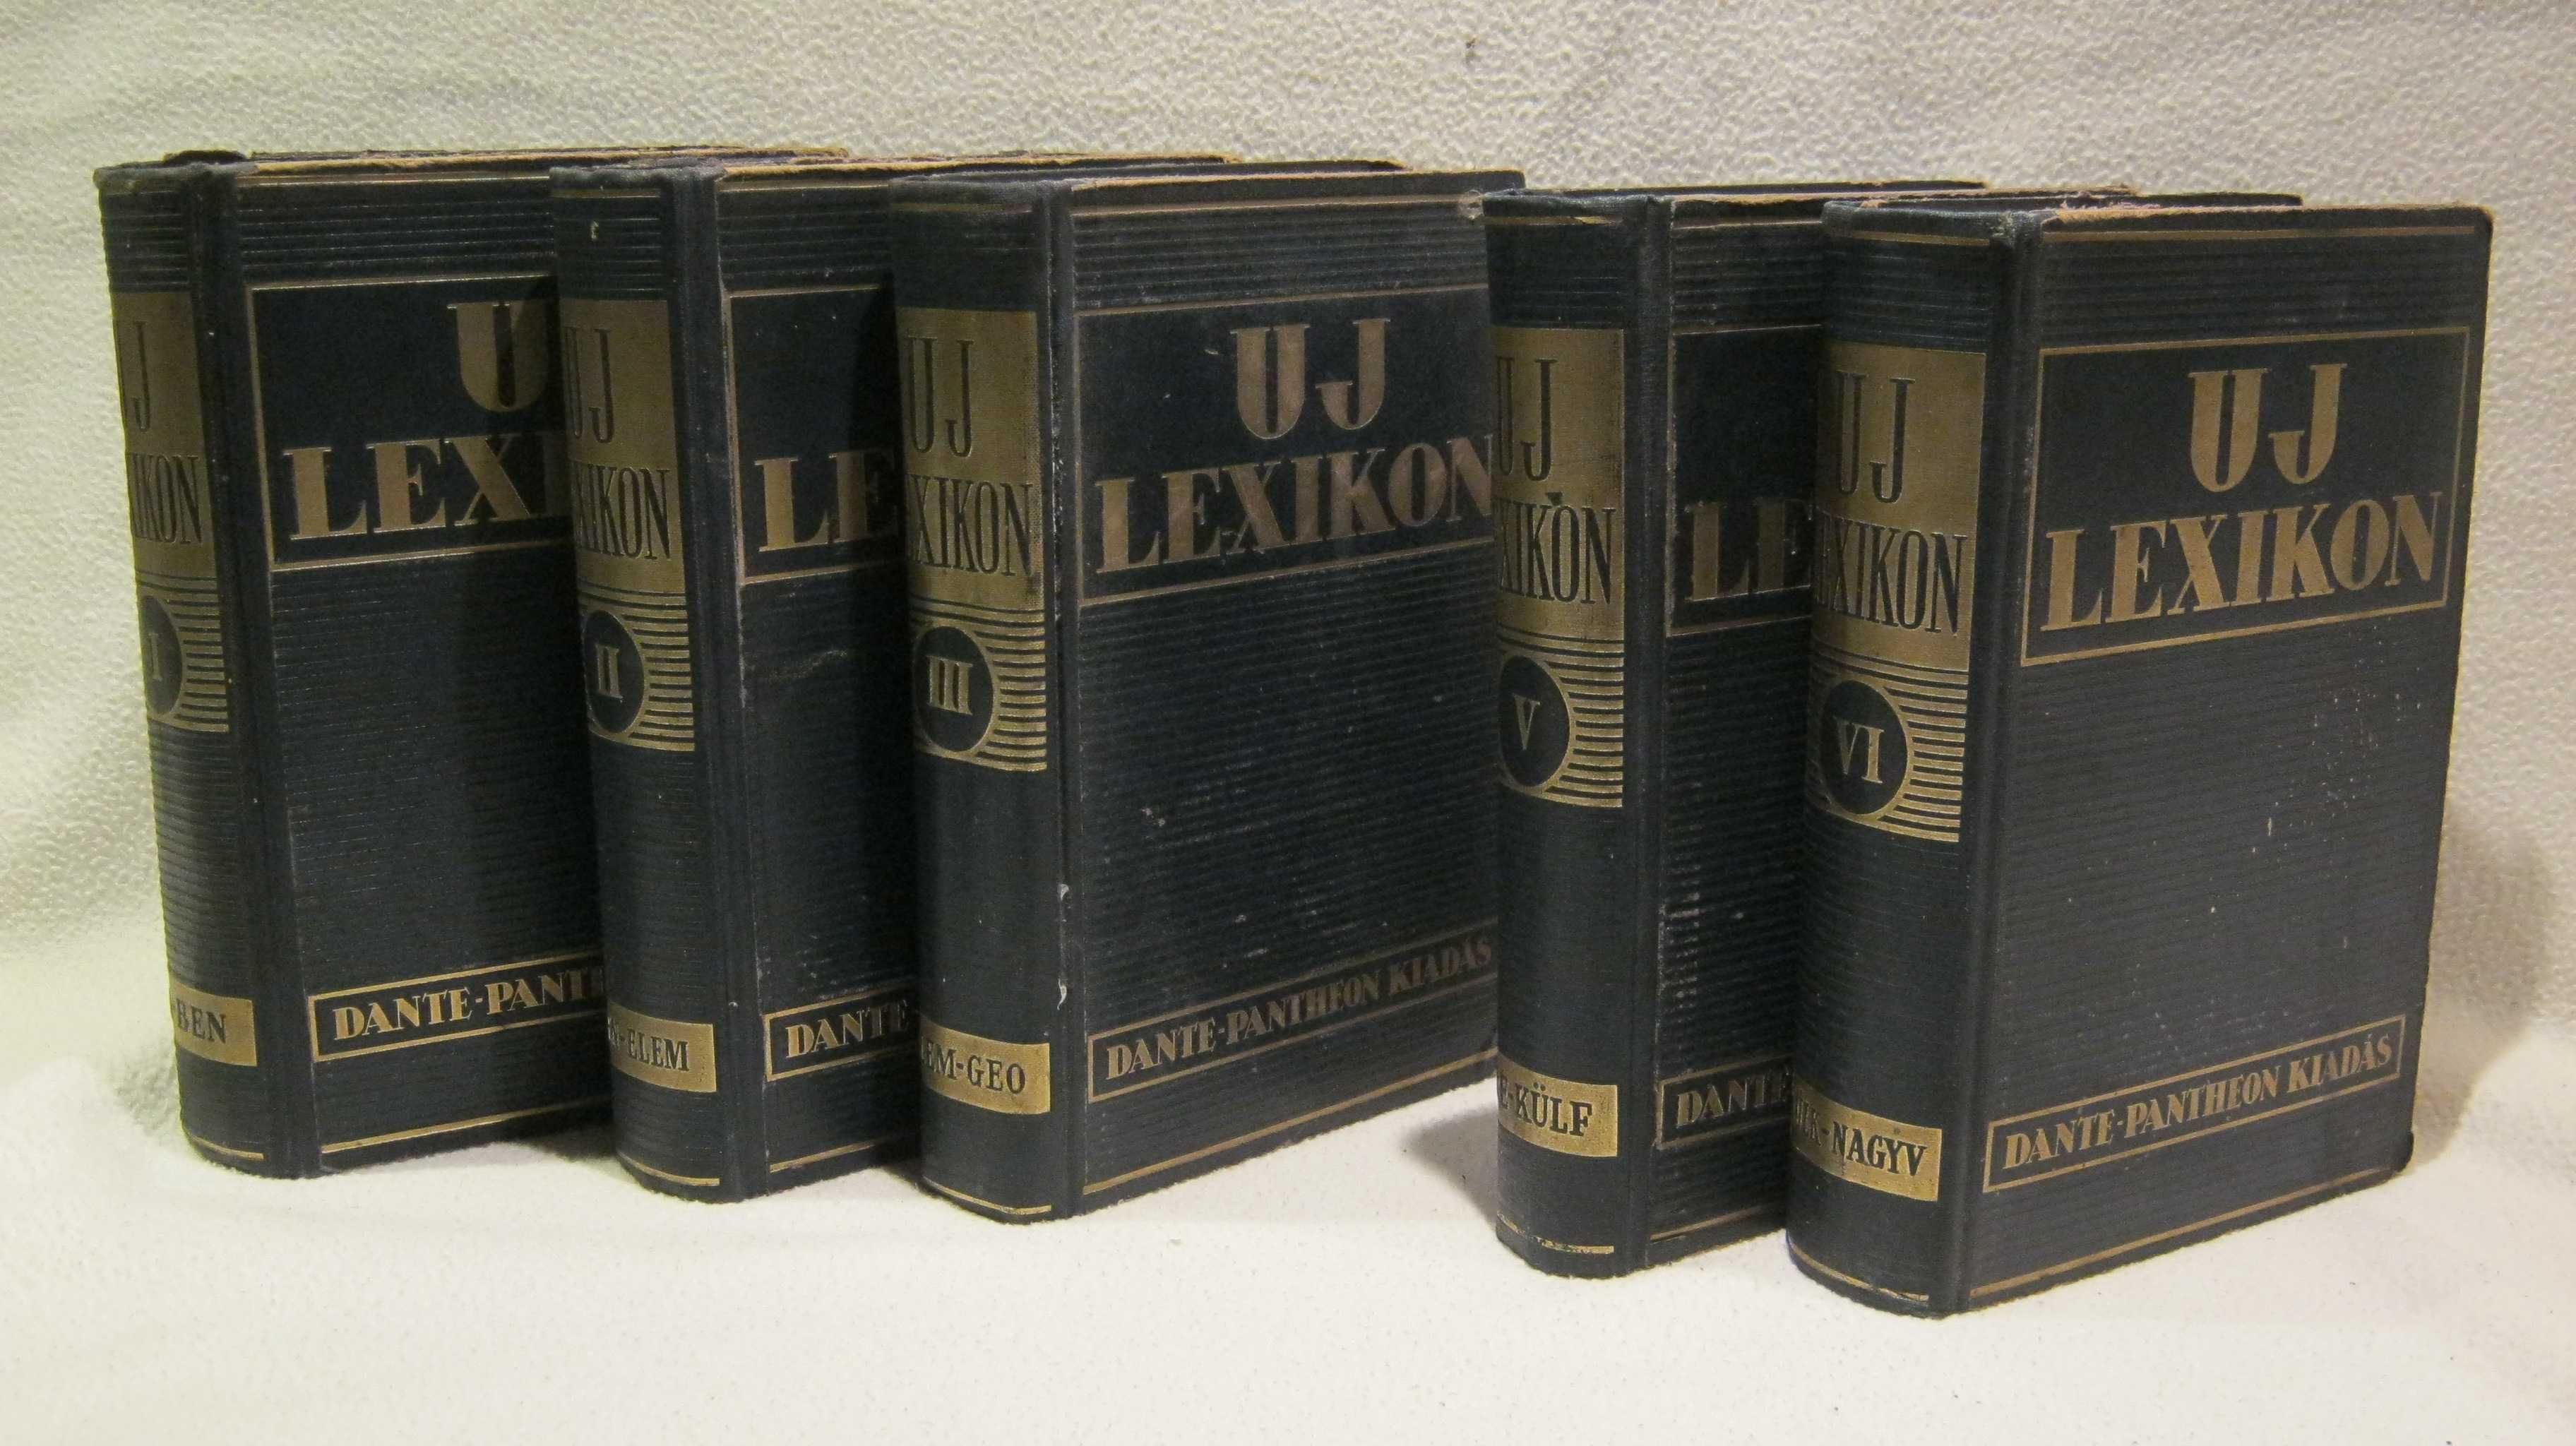 UJ LEXIKON,vol I,II,III,-,V,VI,DANTE PANTHEON, editie maghiara,1936.